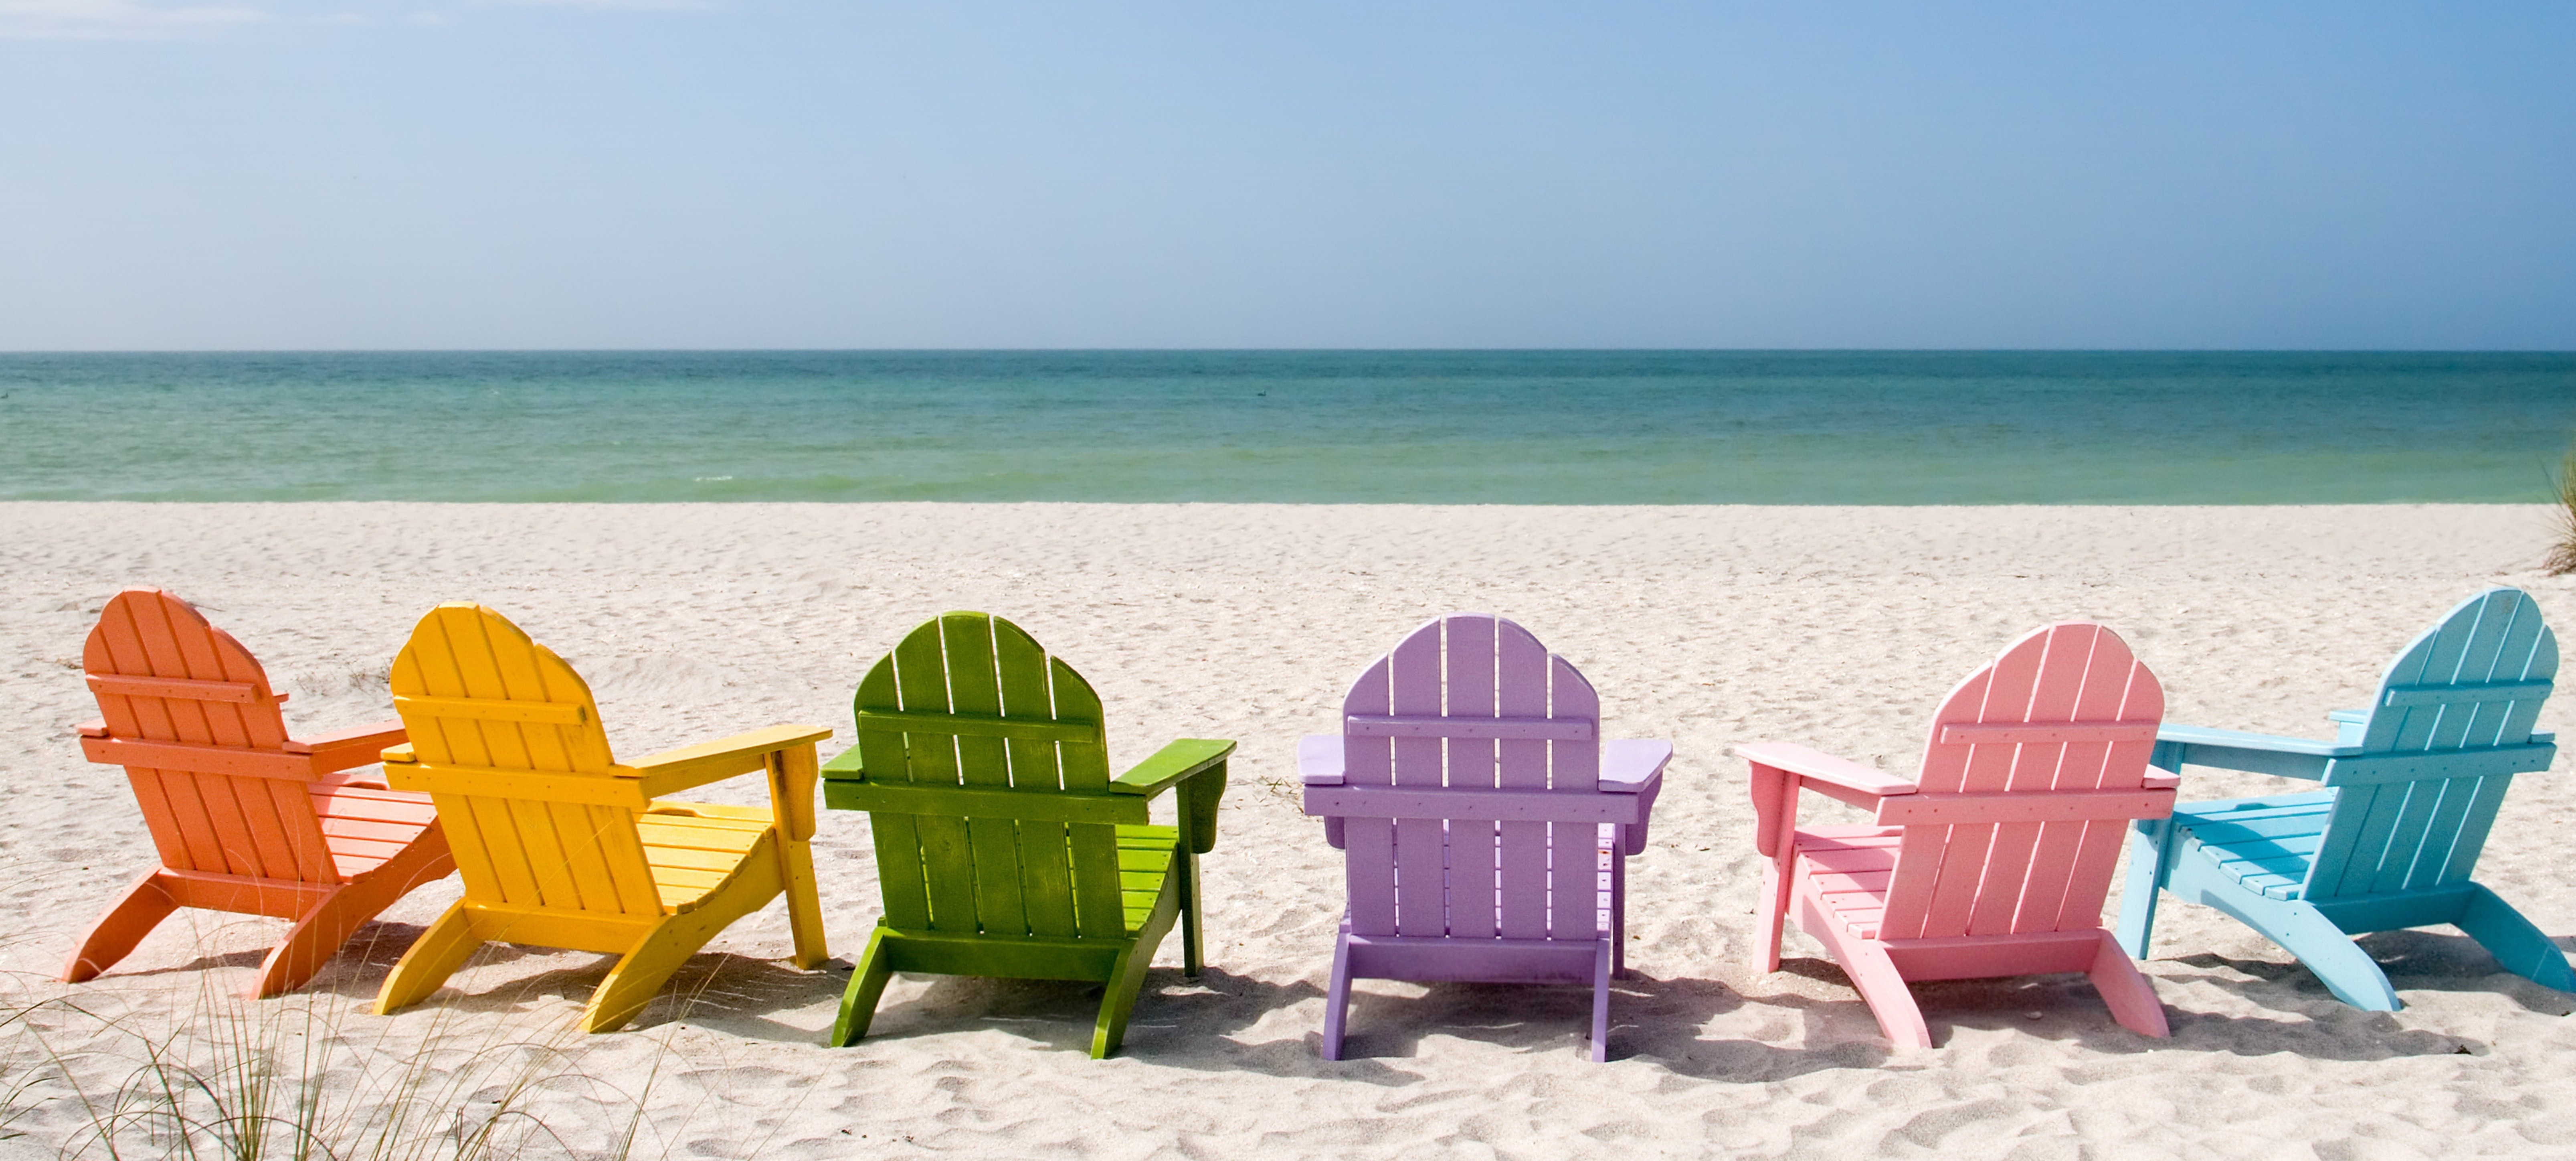 south-carolina-beach-chairs-rainbow-749455-edited